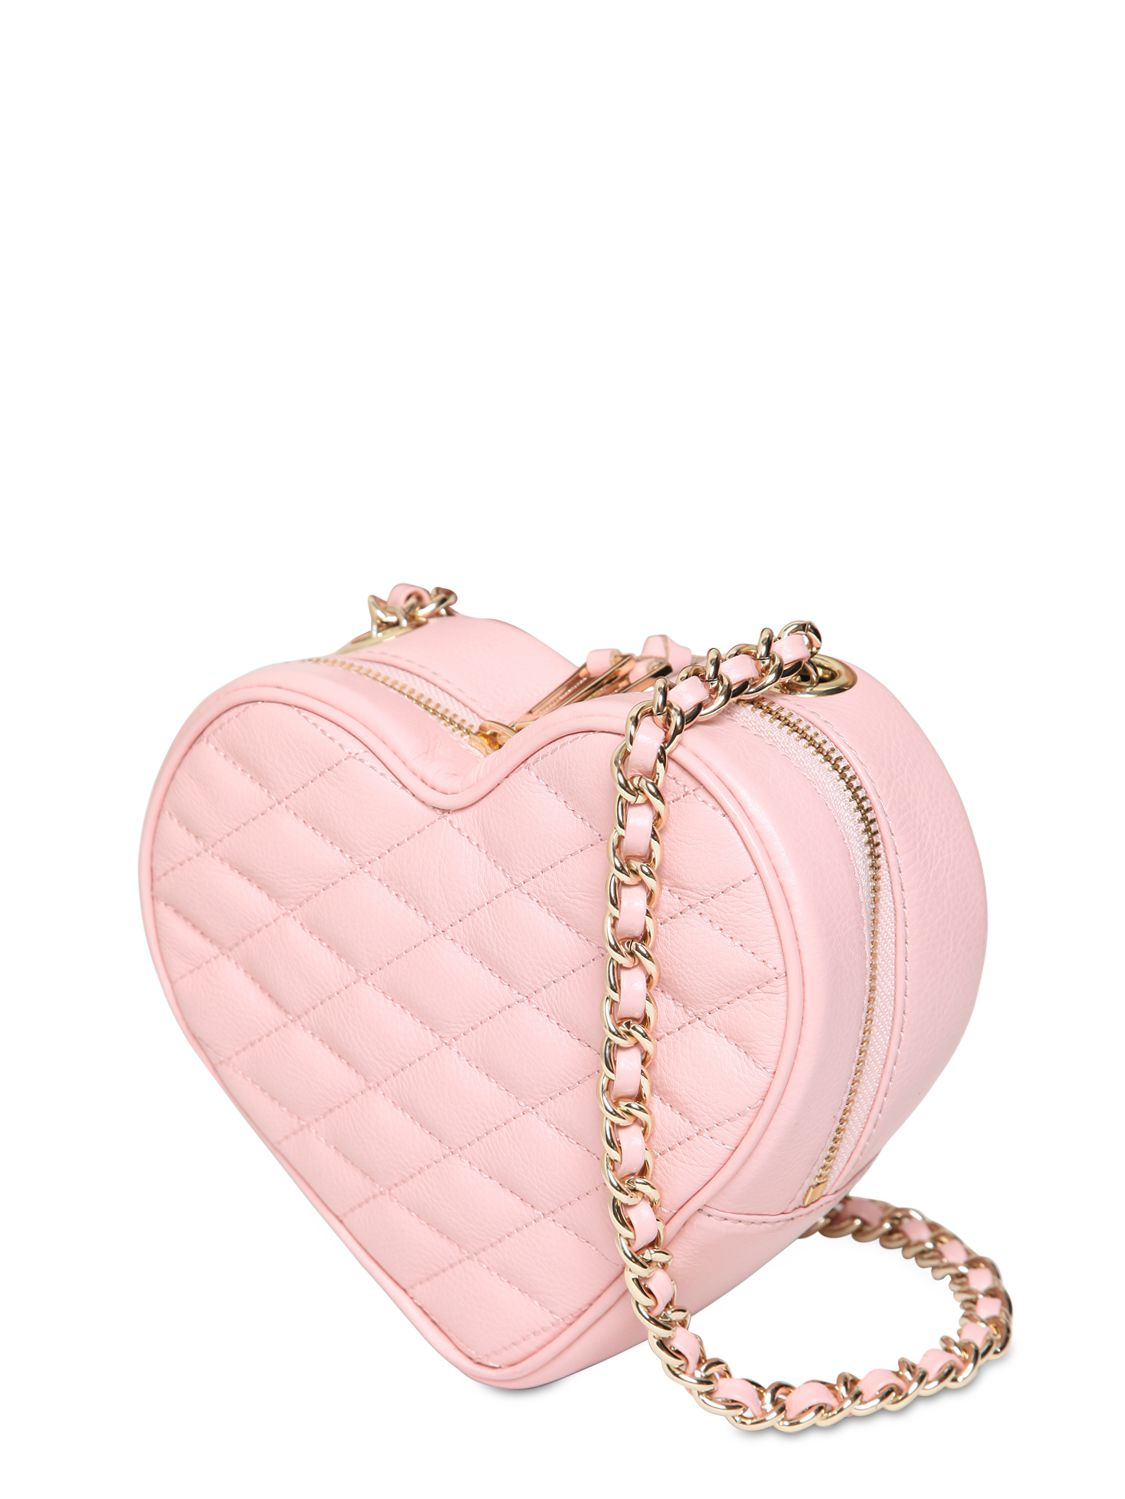 Rebecca Minkoff Heart Quilted Leather Shoulder Bag in Light Pink (Pink ...